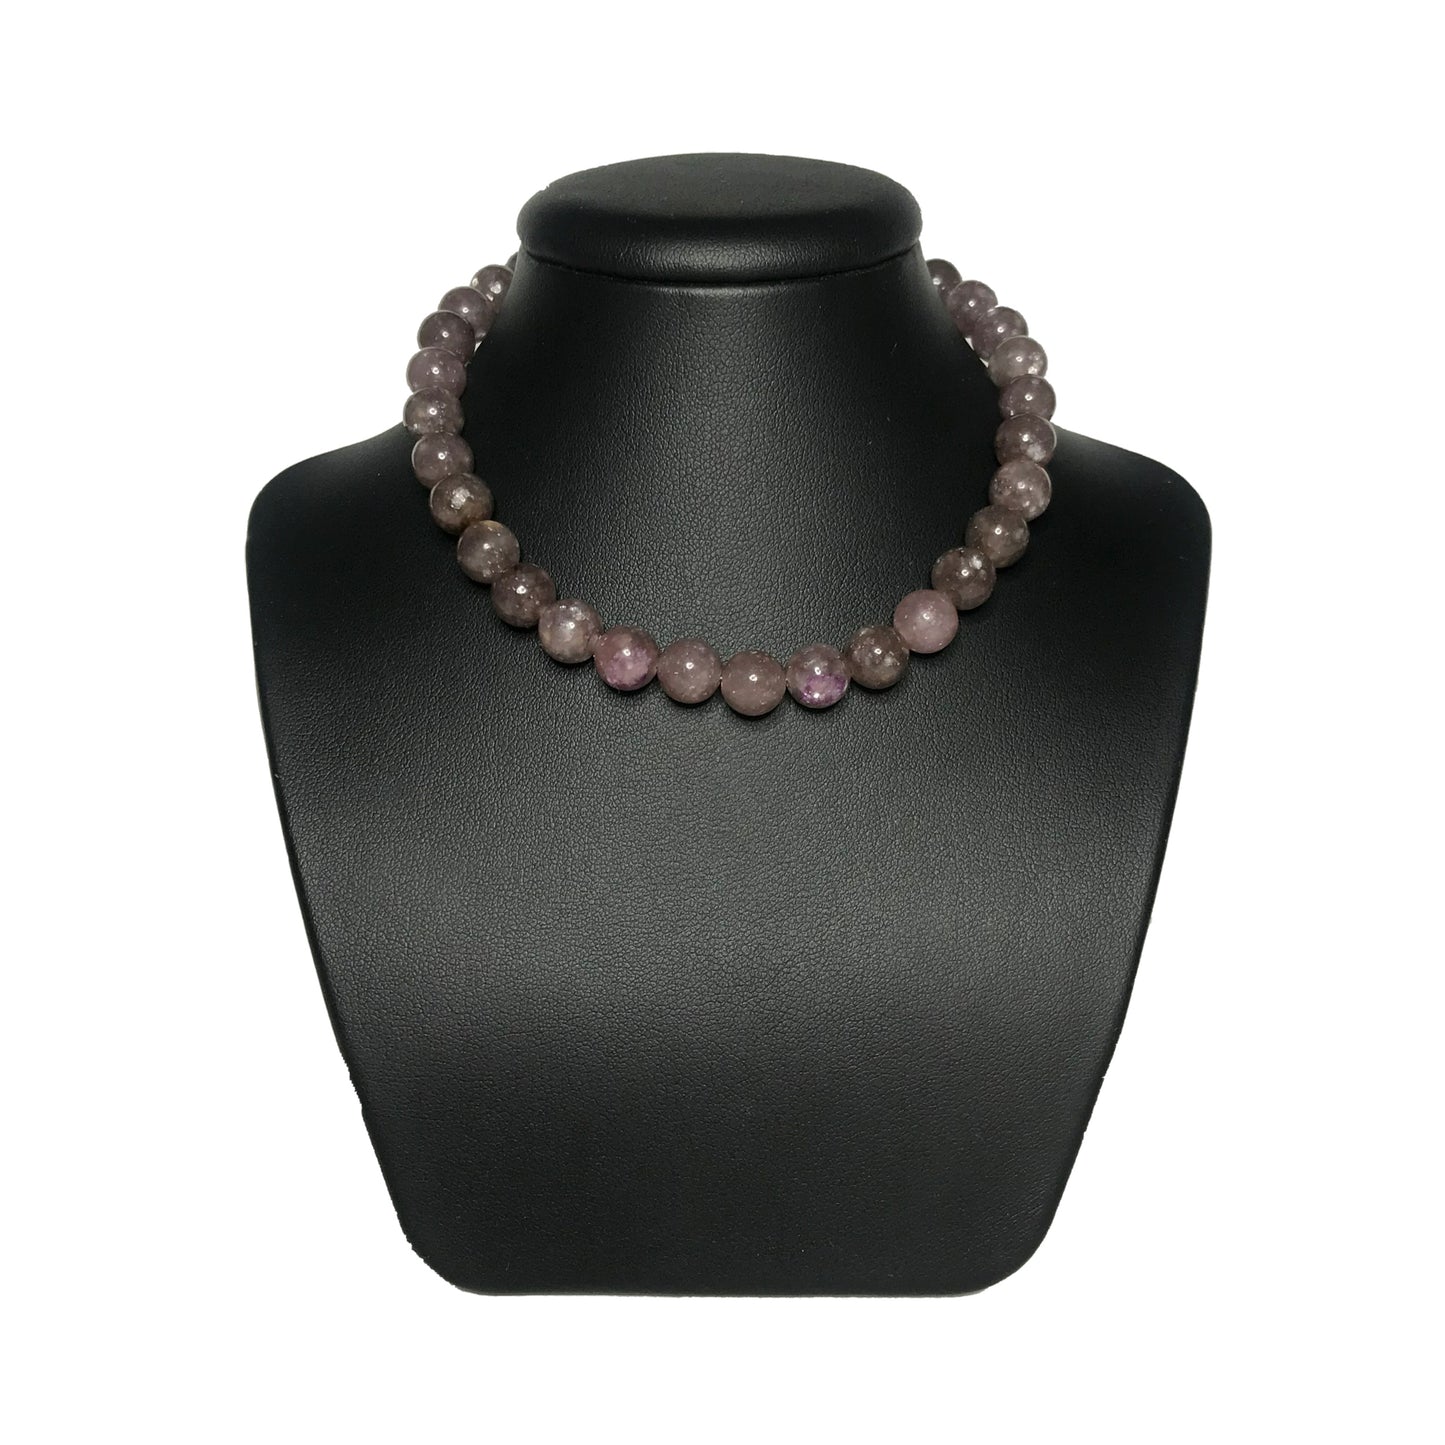 Lepidolite necklace on black stand